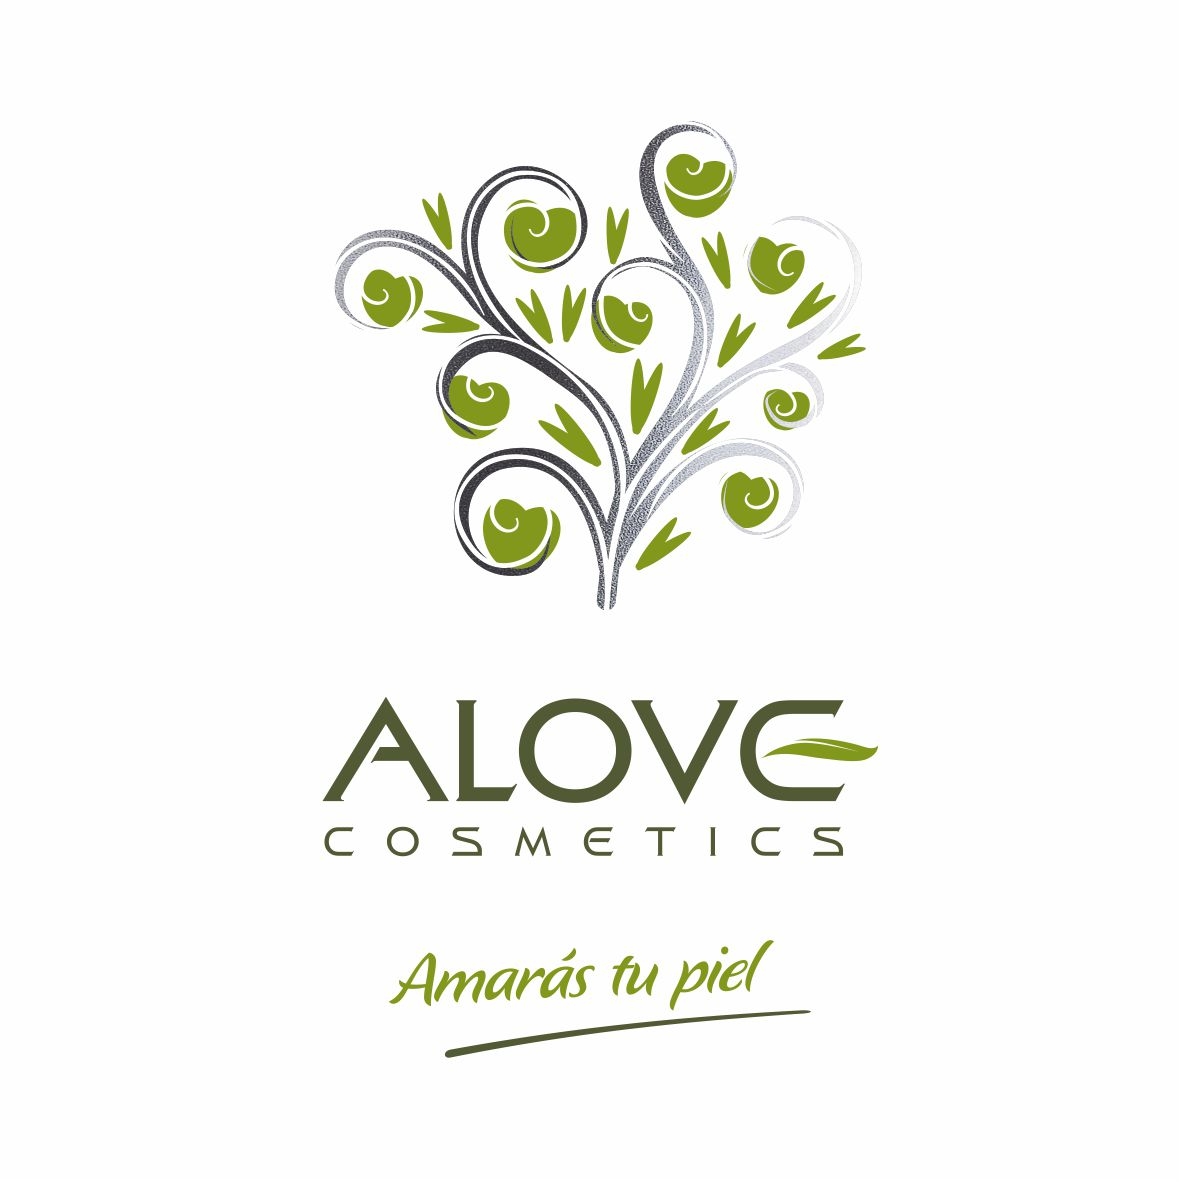 Alove cosmetics